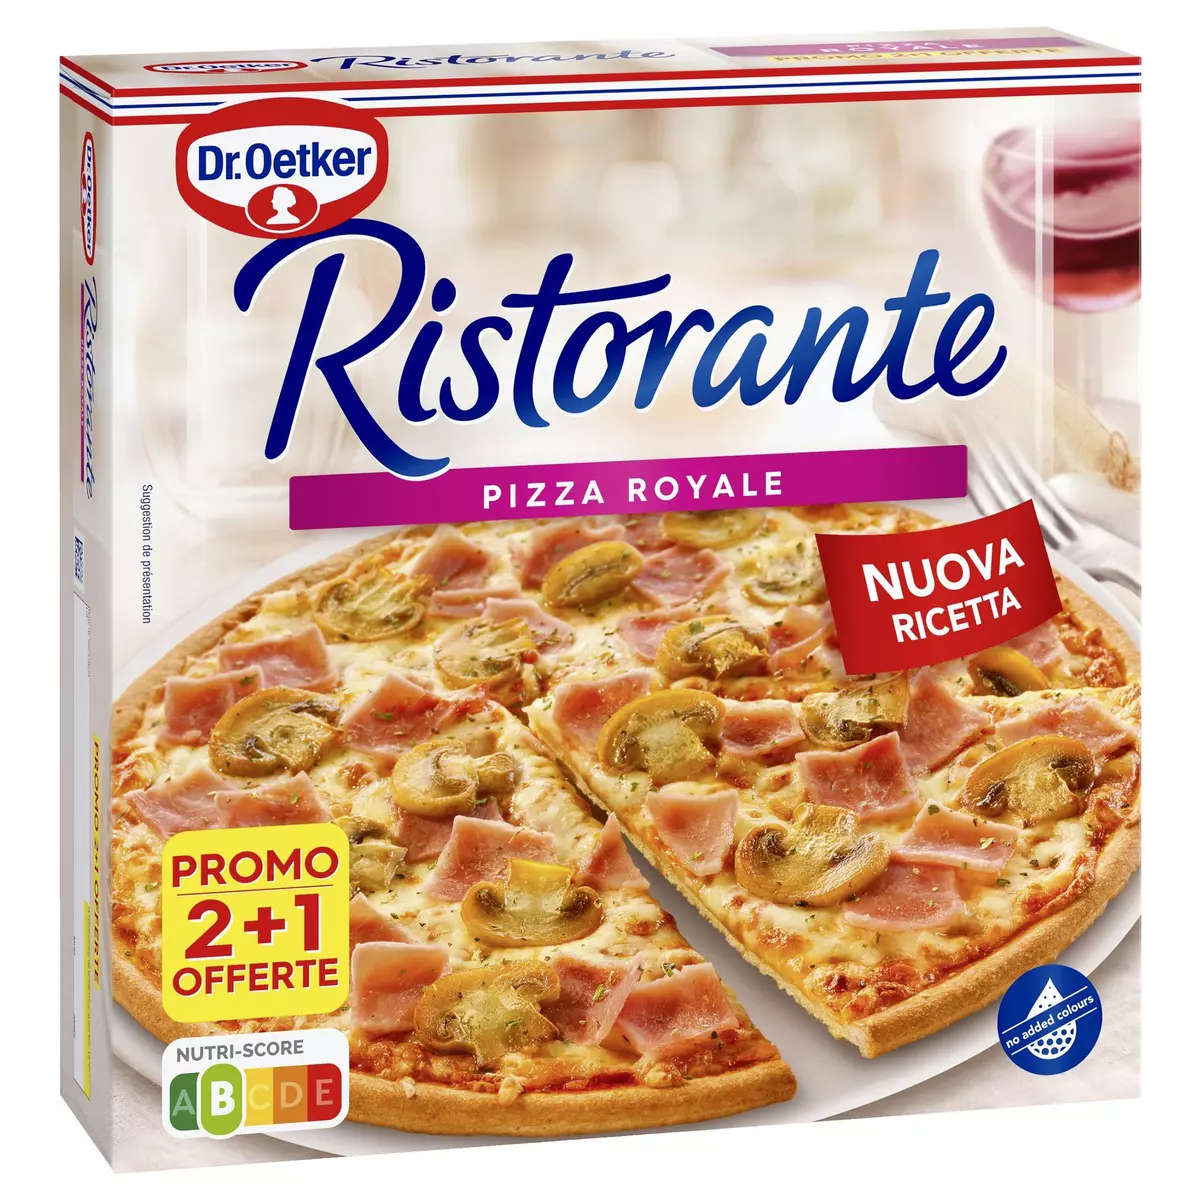 DR OETKER Ristorante pizza royale 2+1 offerte 3x340g